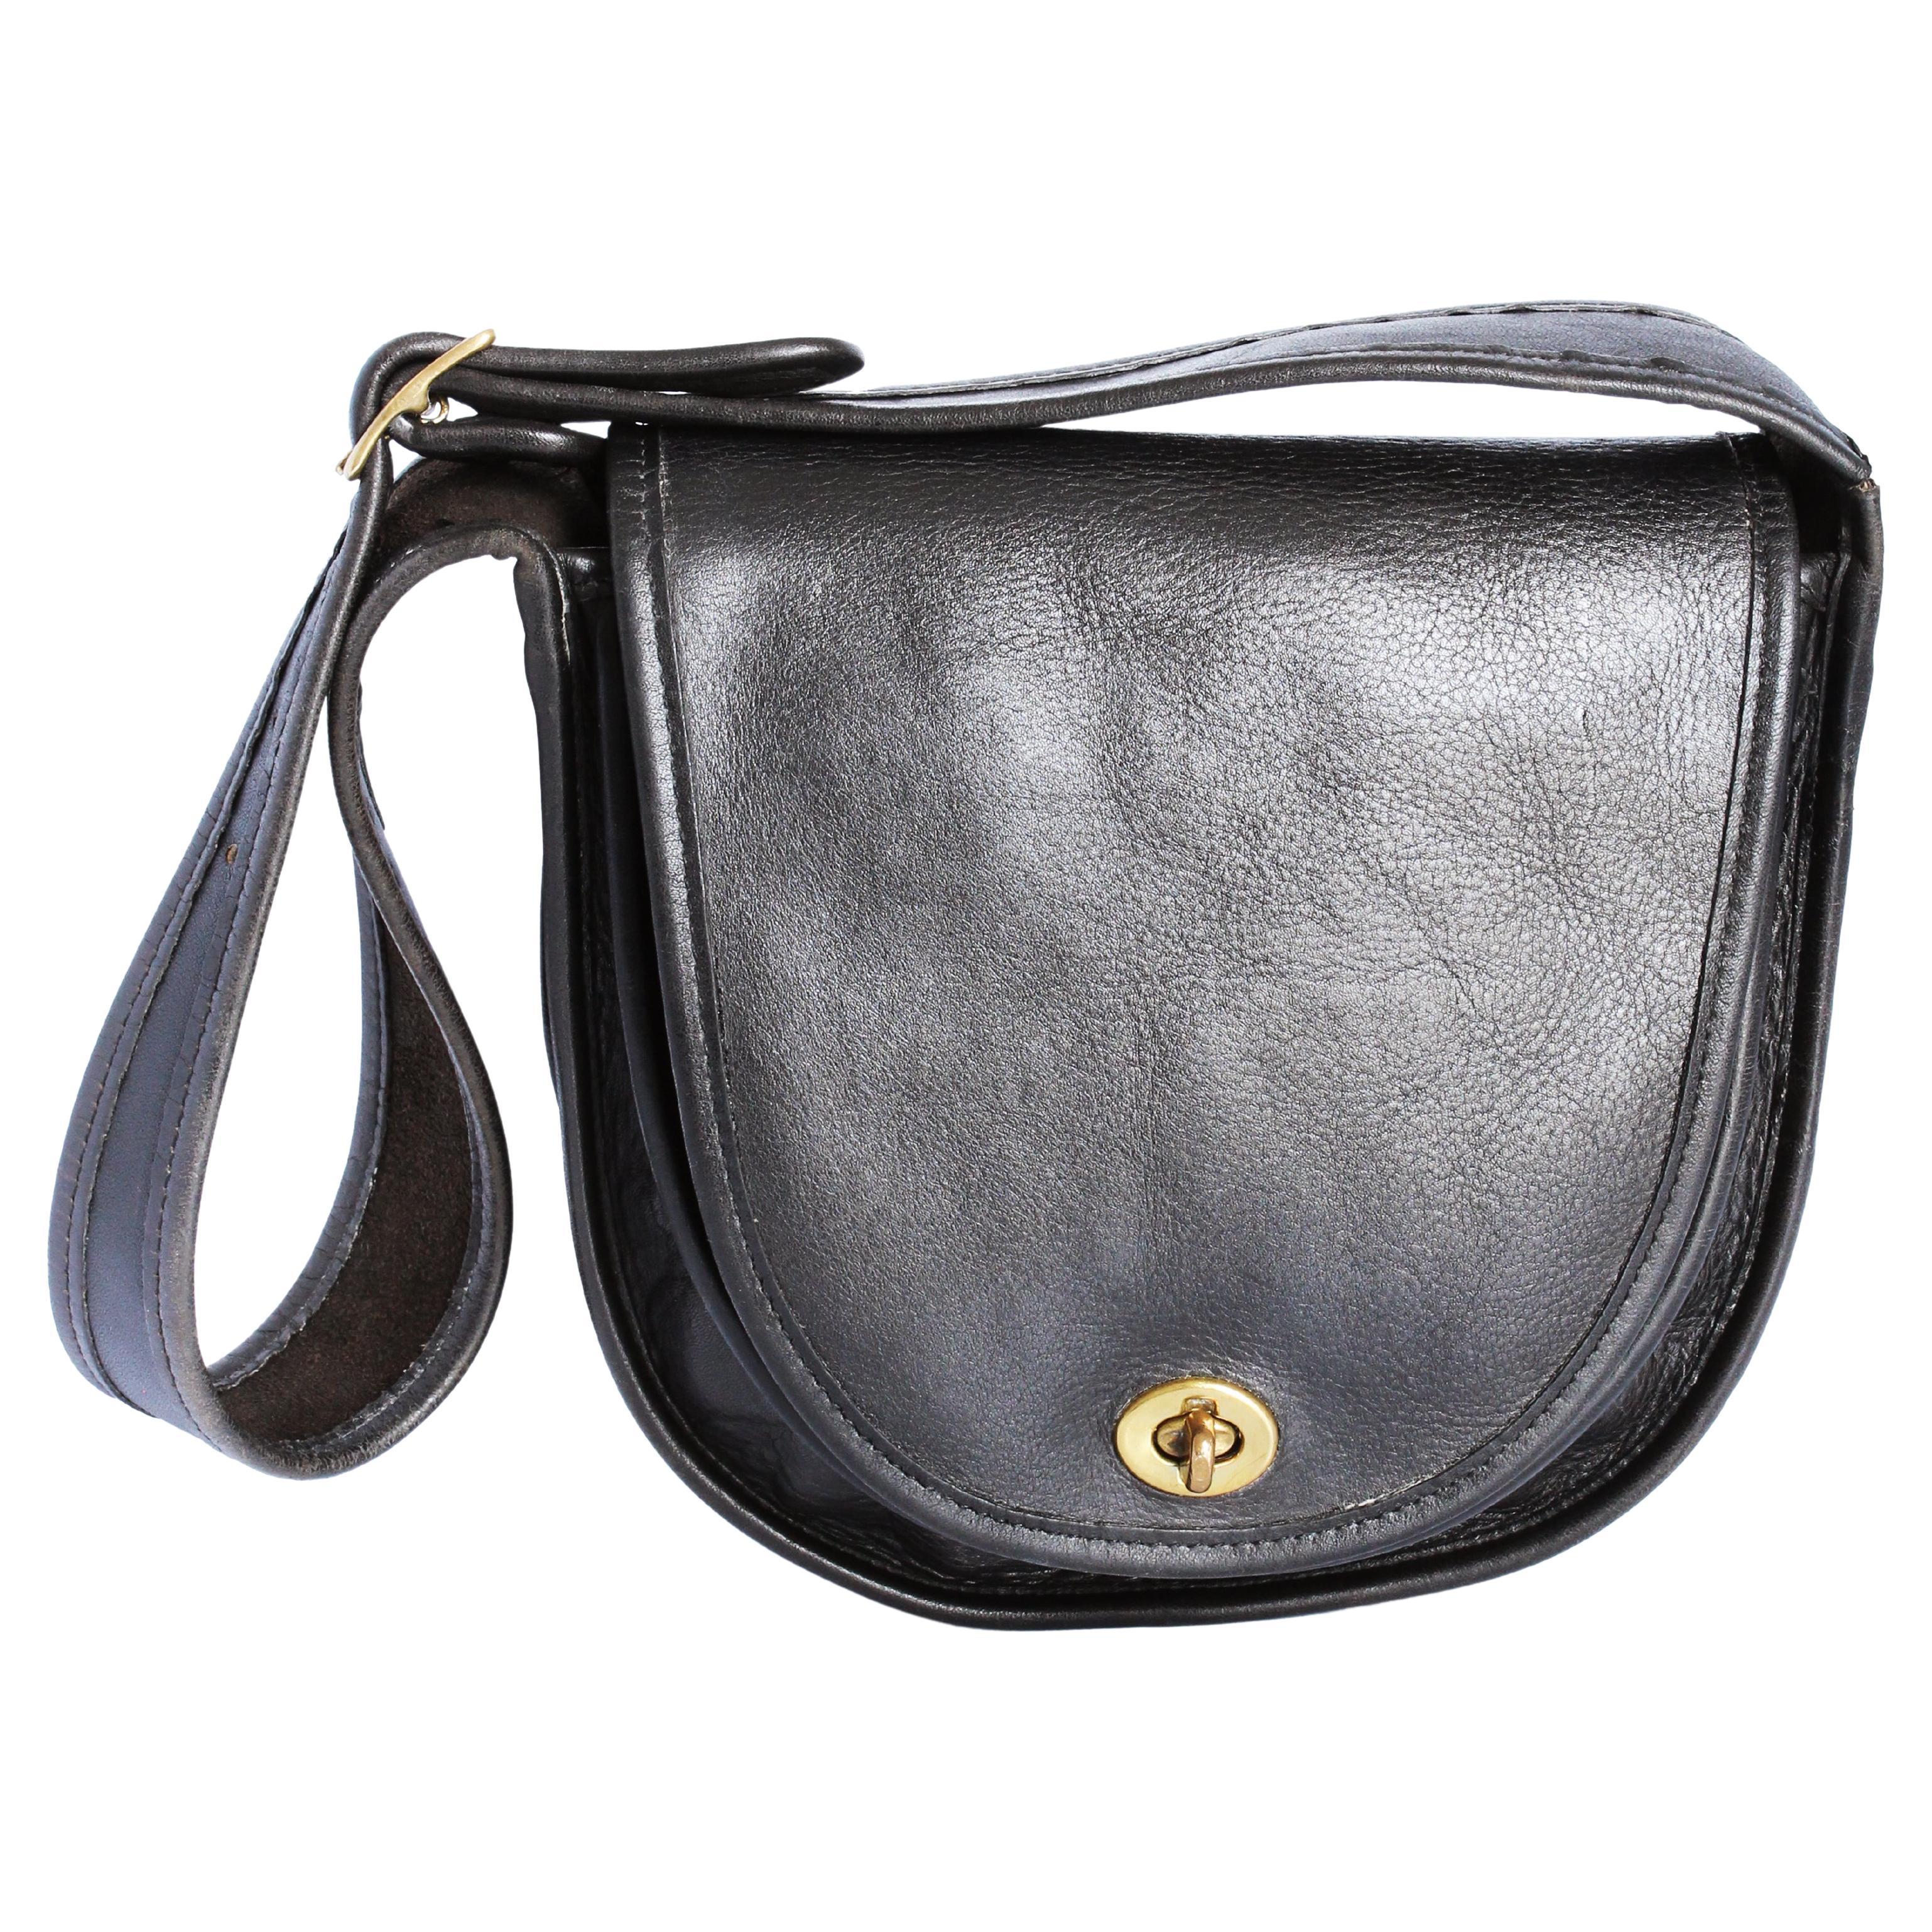 Check out my Vintage coach bag vs this new coach bag online : r/handbags